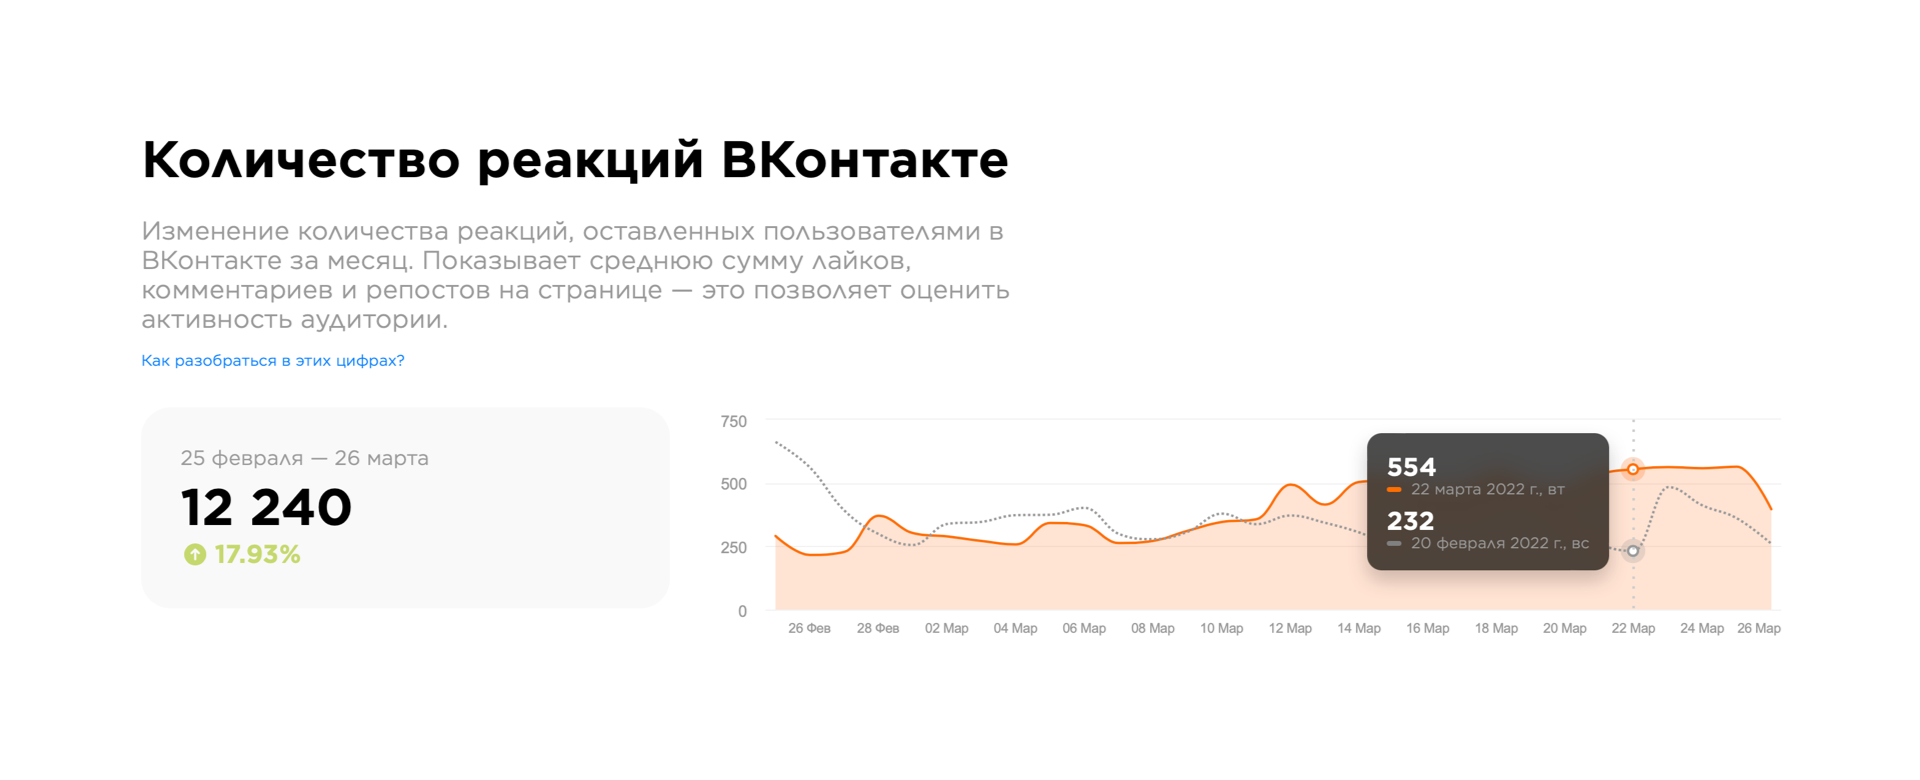 Количество реакций ВКонтакте.png